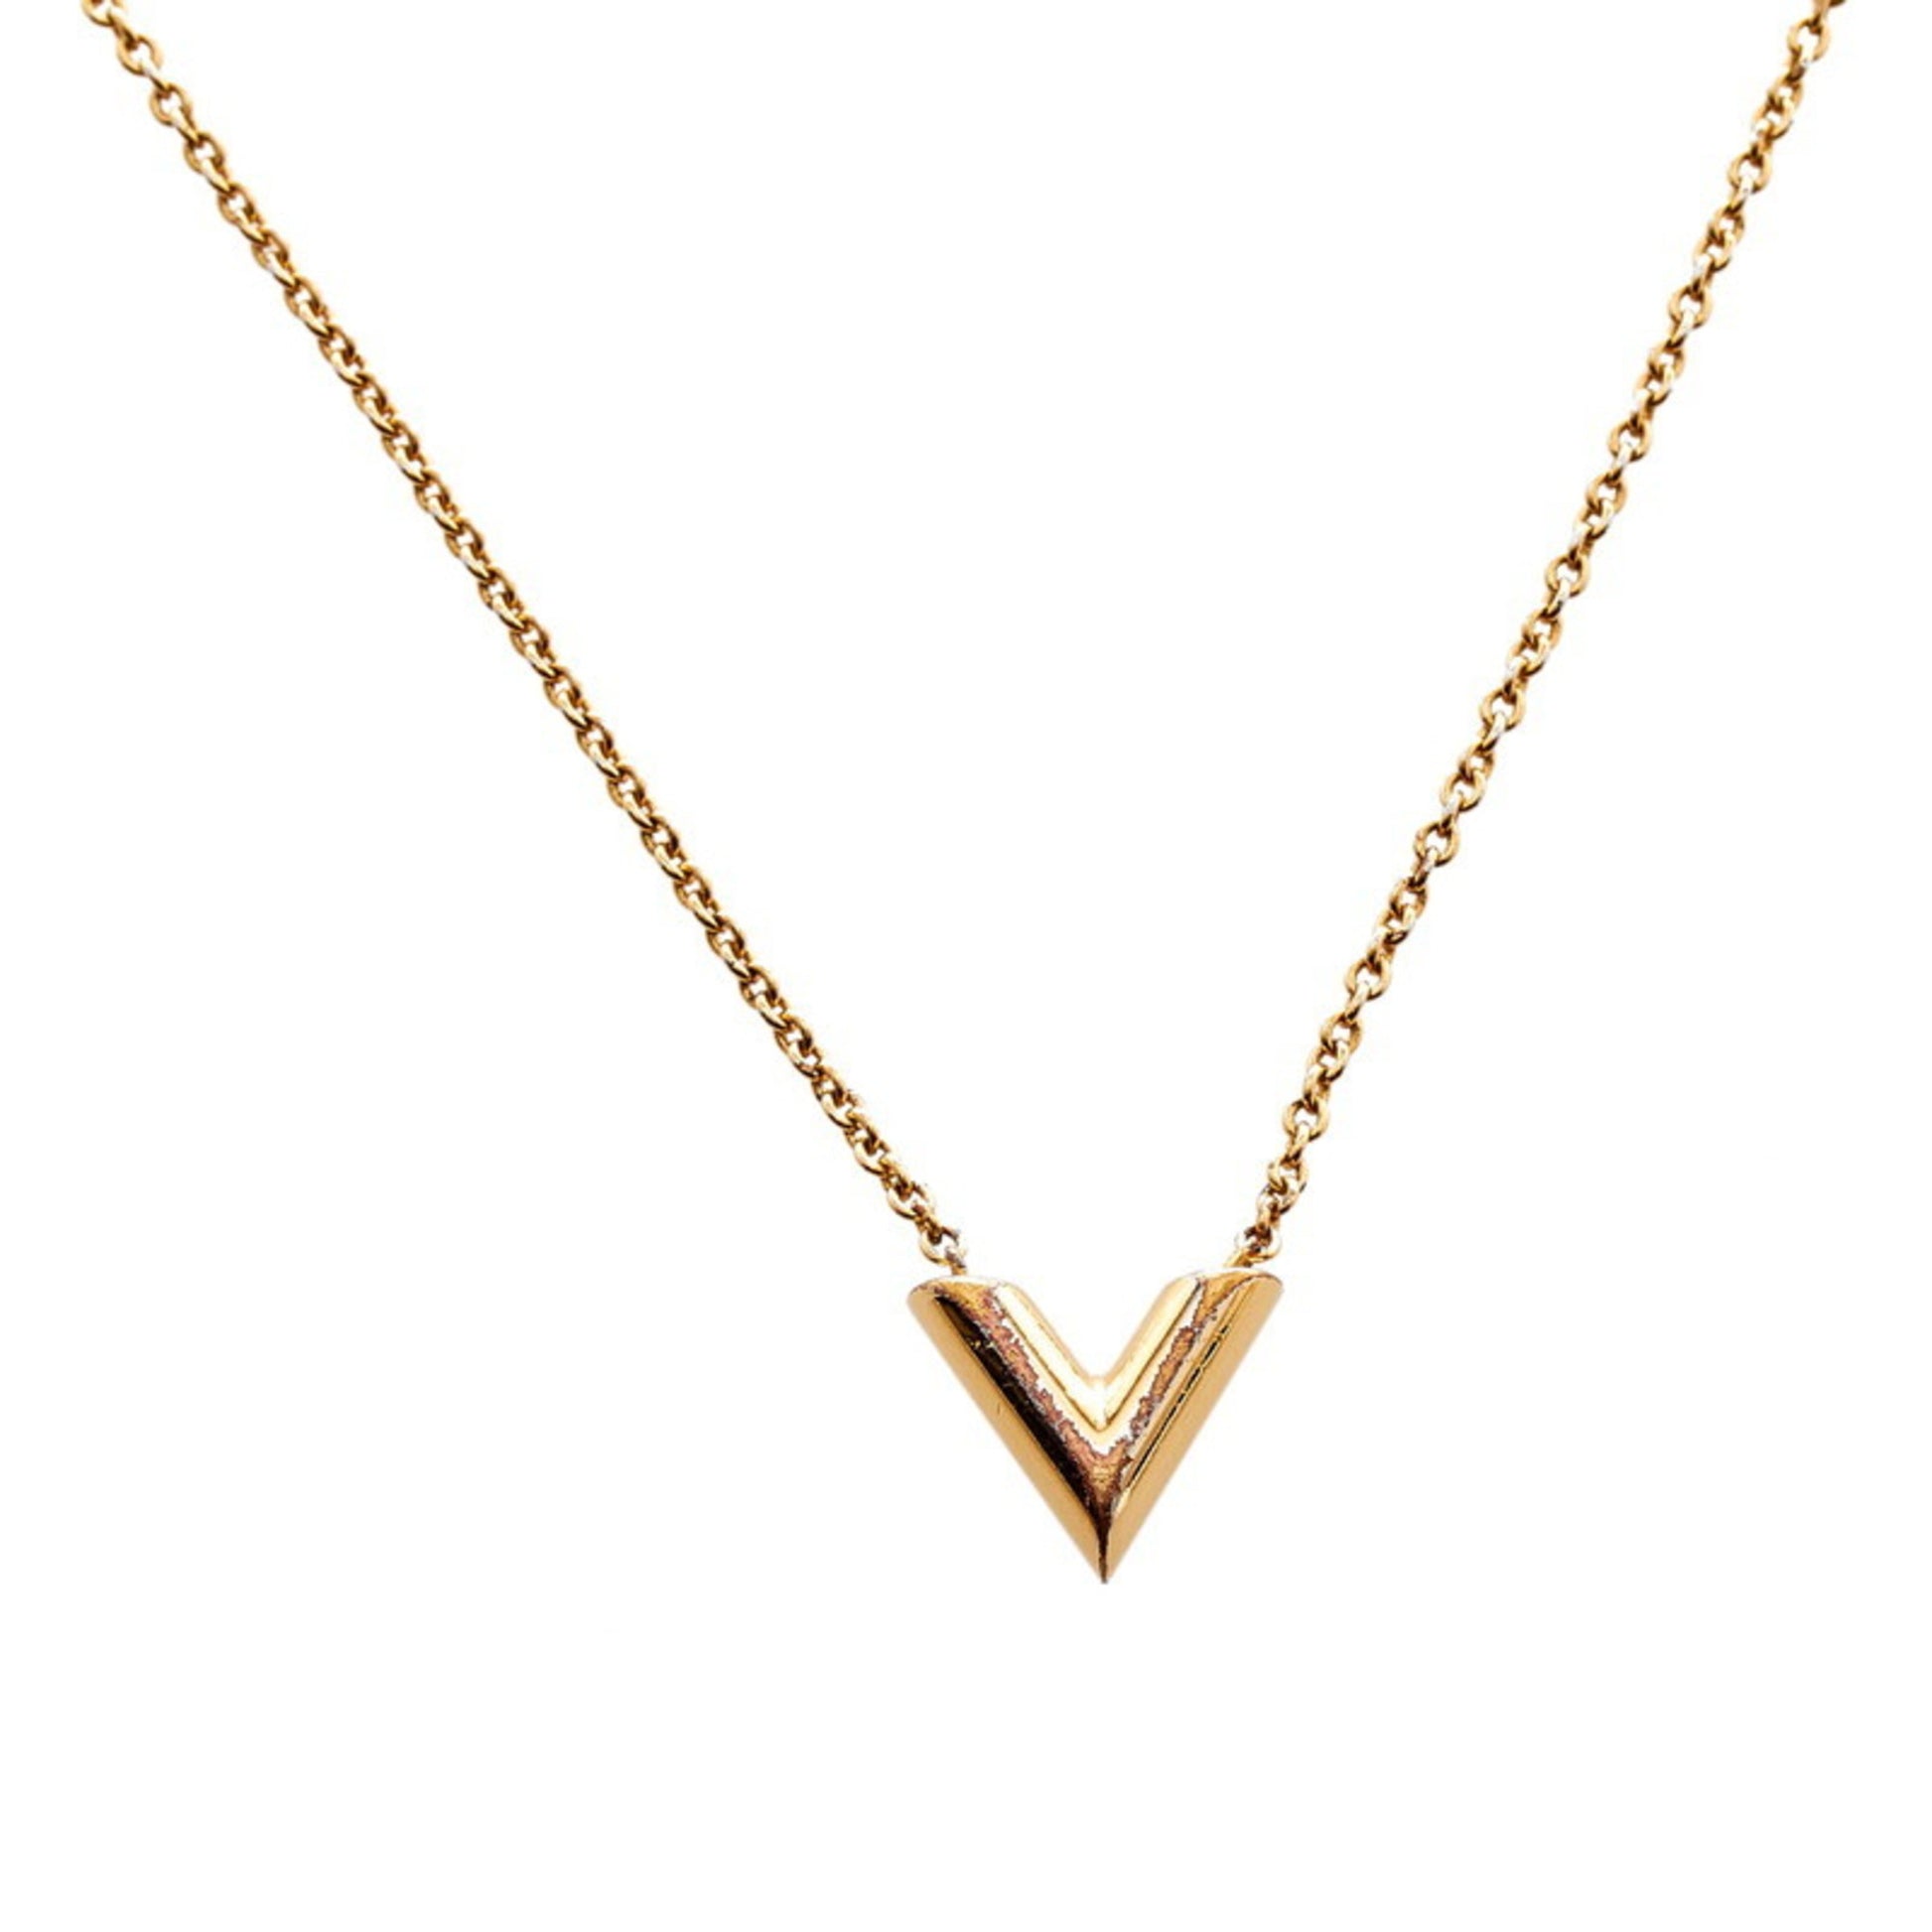 Shop Louis Vuitton Essential v necklace (M61083) by SolidConnection